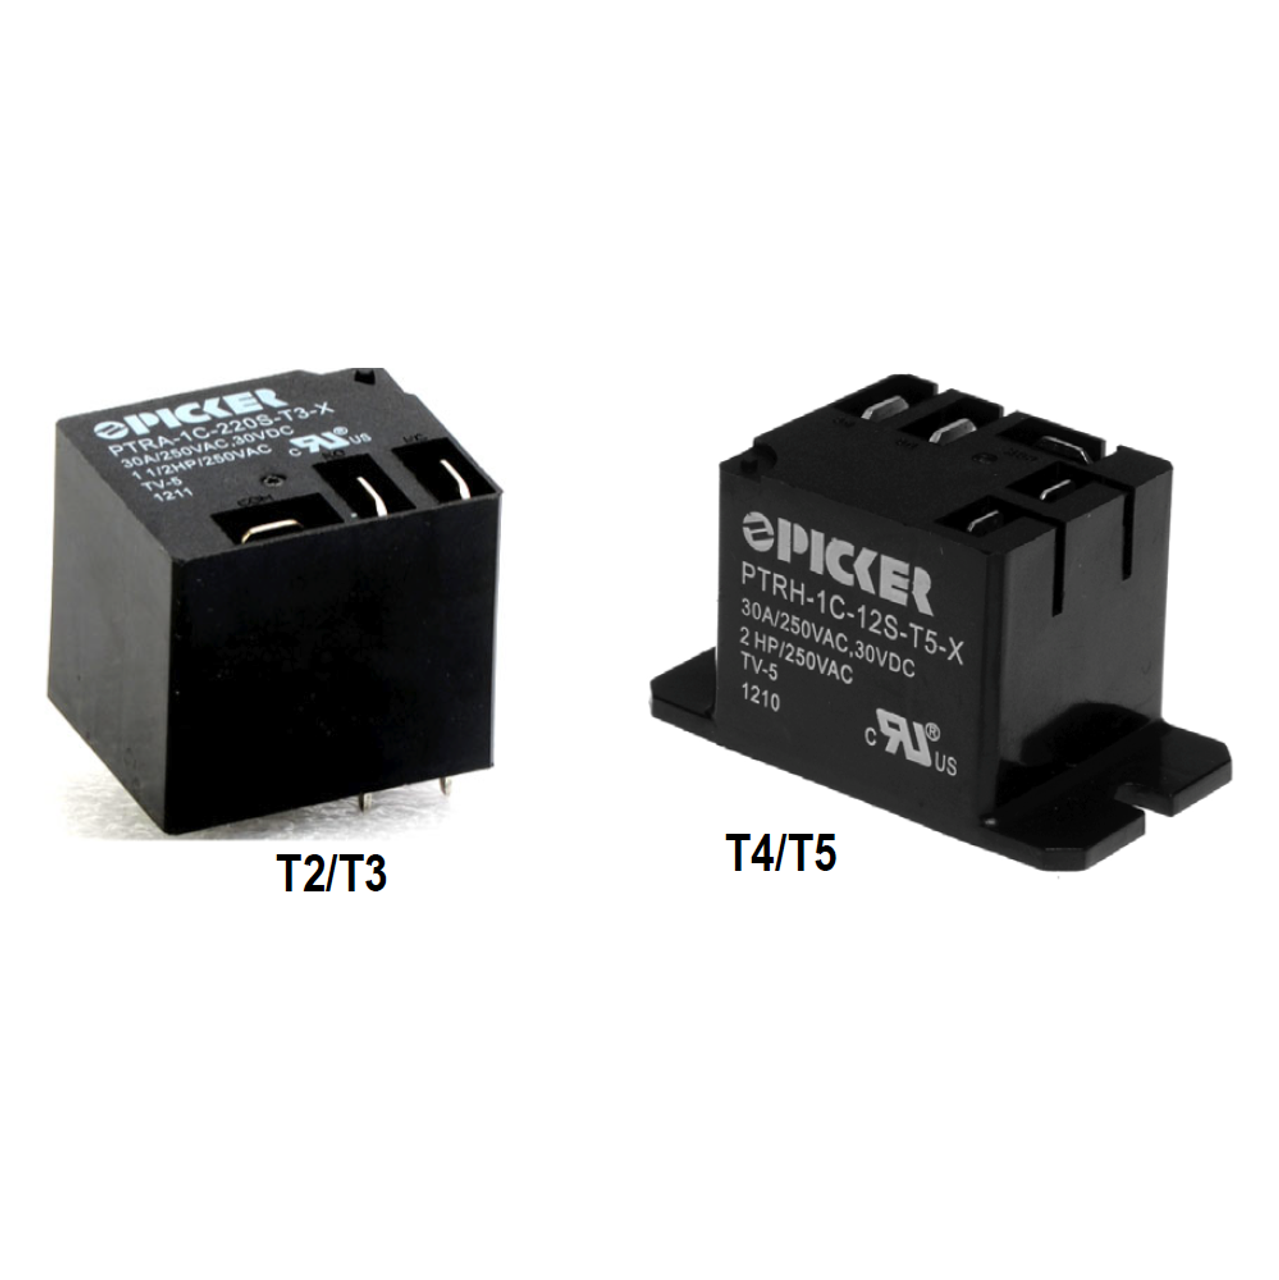 Picker PTRH-1C-110SF-T2-X-0.6 Power Relays